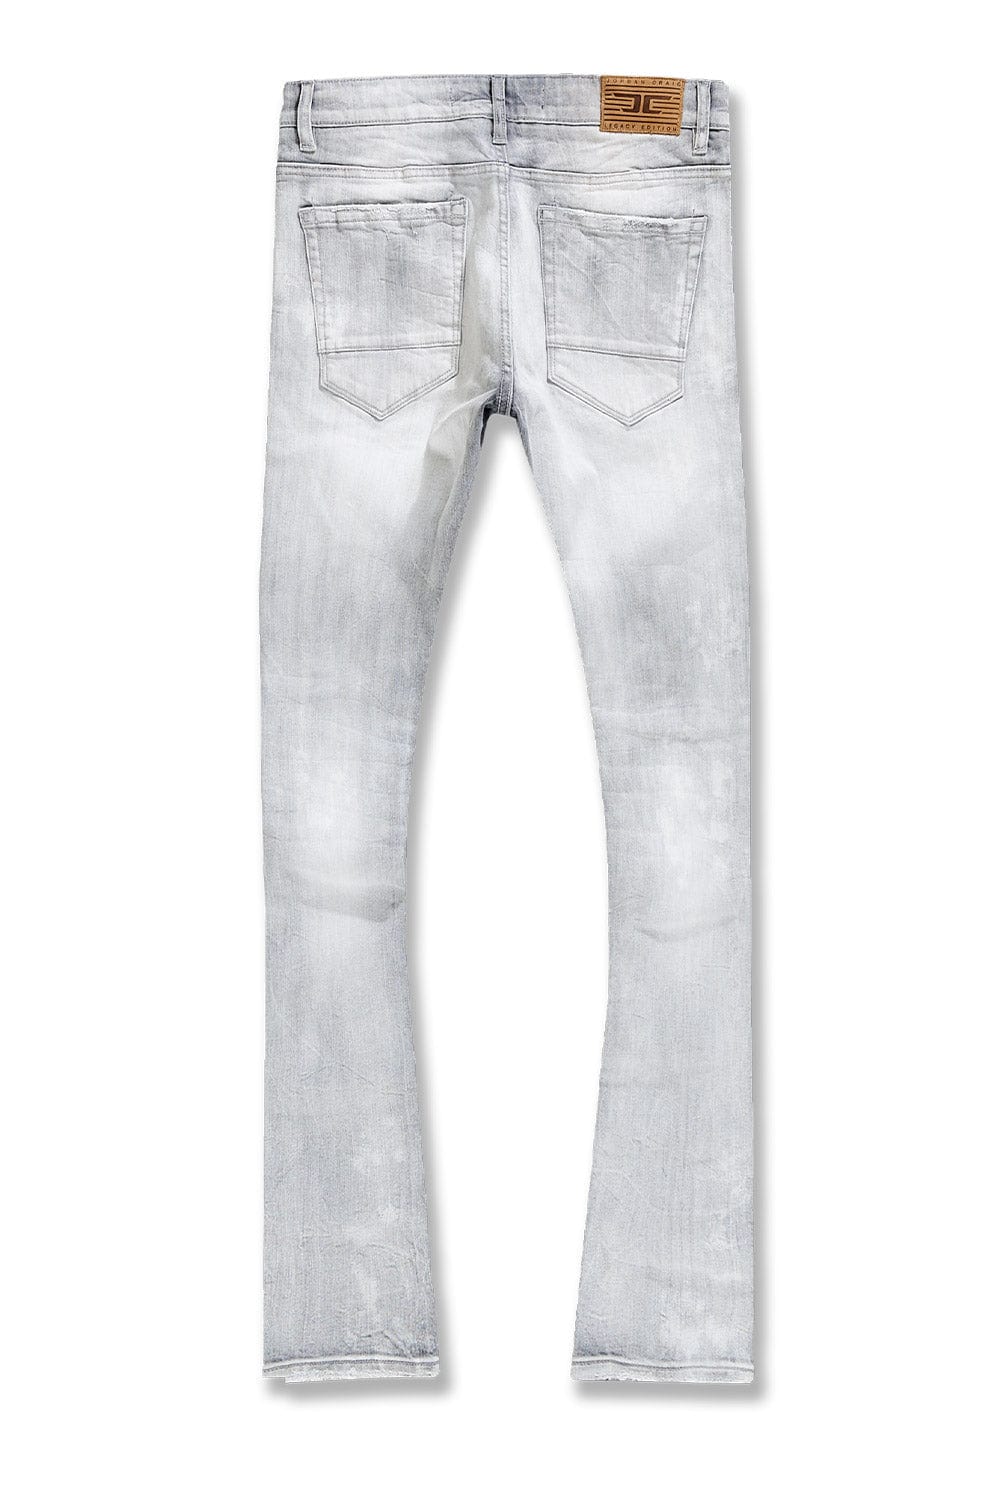 Jordan Craig Grey Stacked Jeans